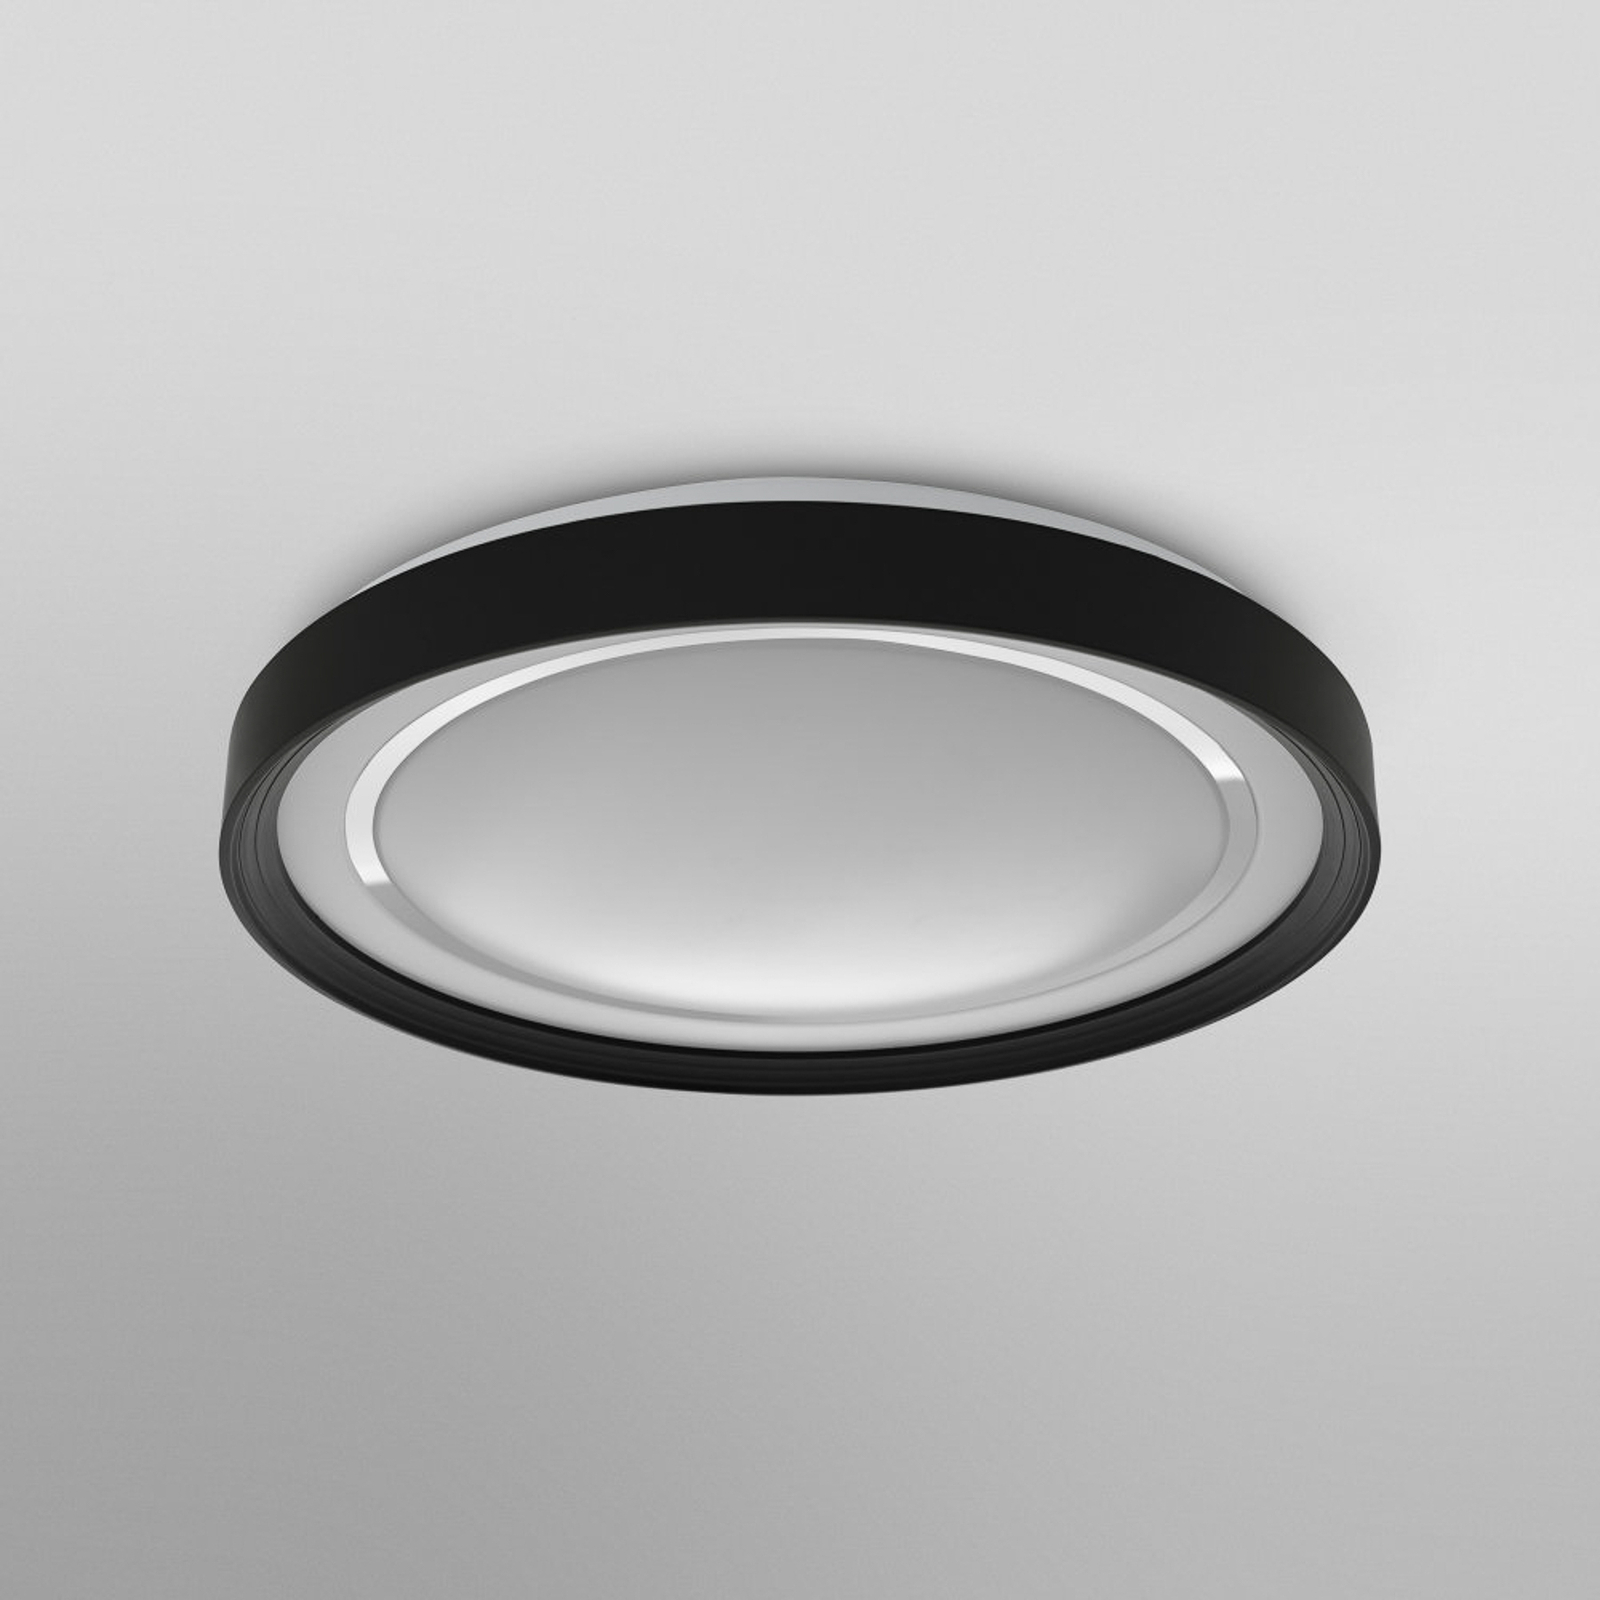 LEDVANCE SMART+ WiFi Orbis Gavin plafonnier LED